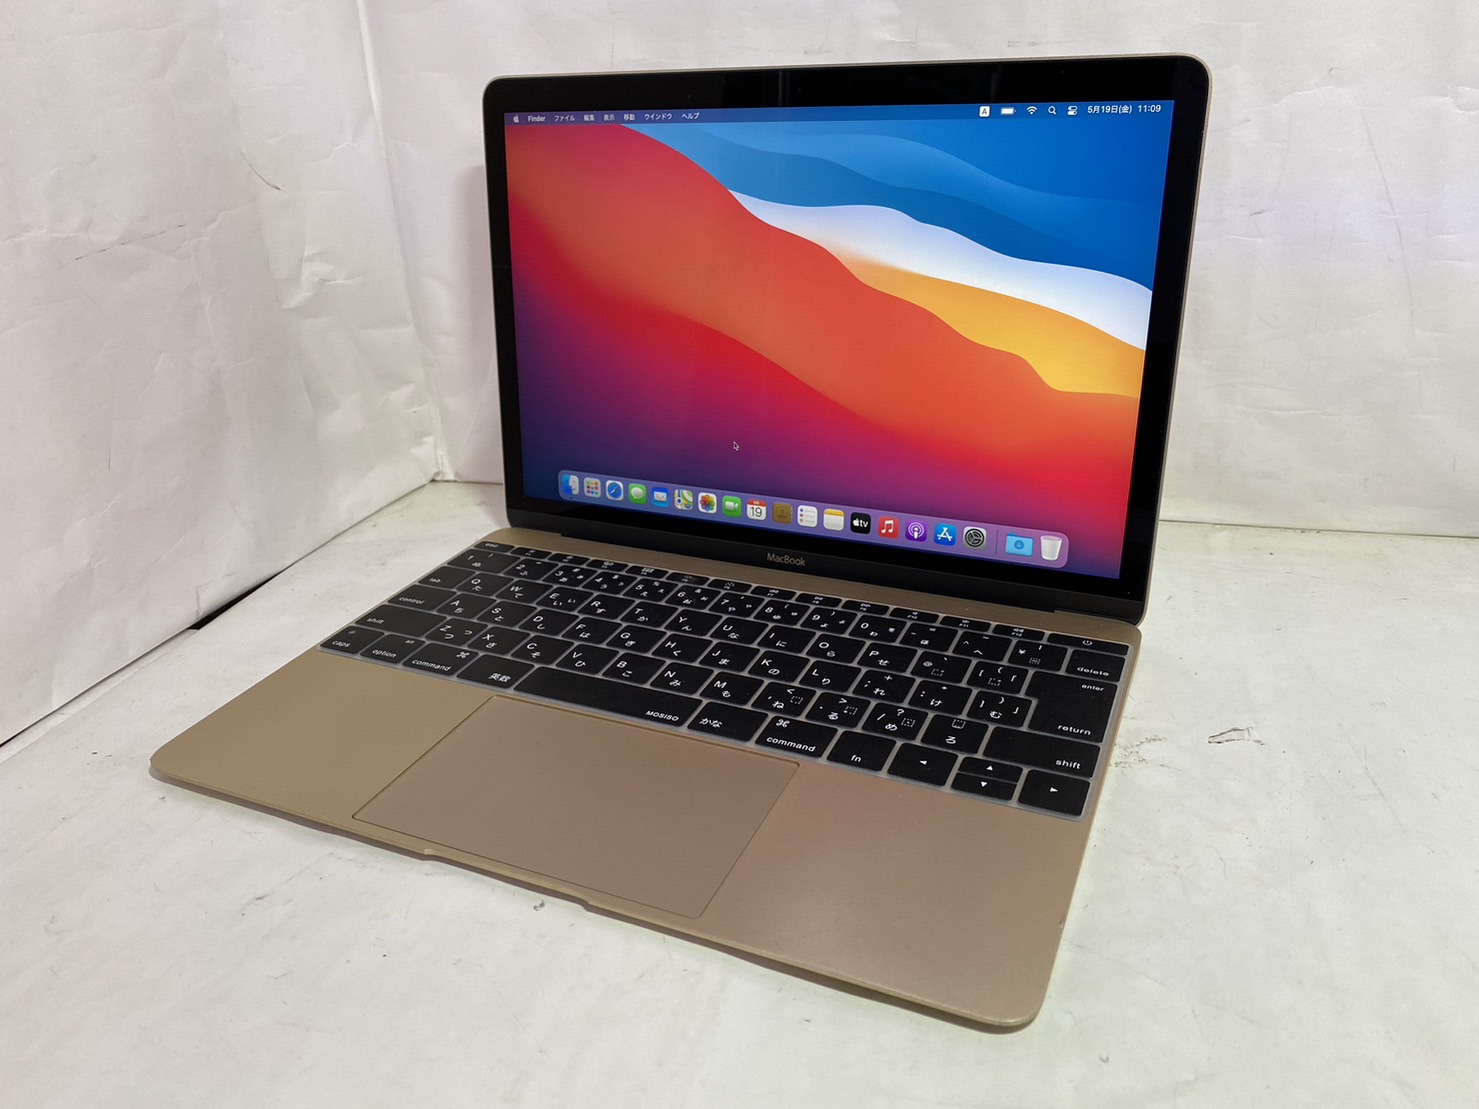 APPLE(アップル) MacBook (Retina, 12-inch, Early 2015) A1534